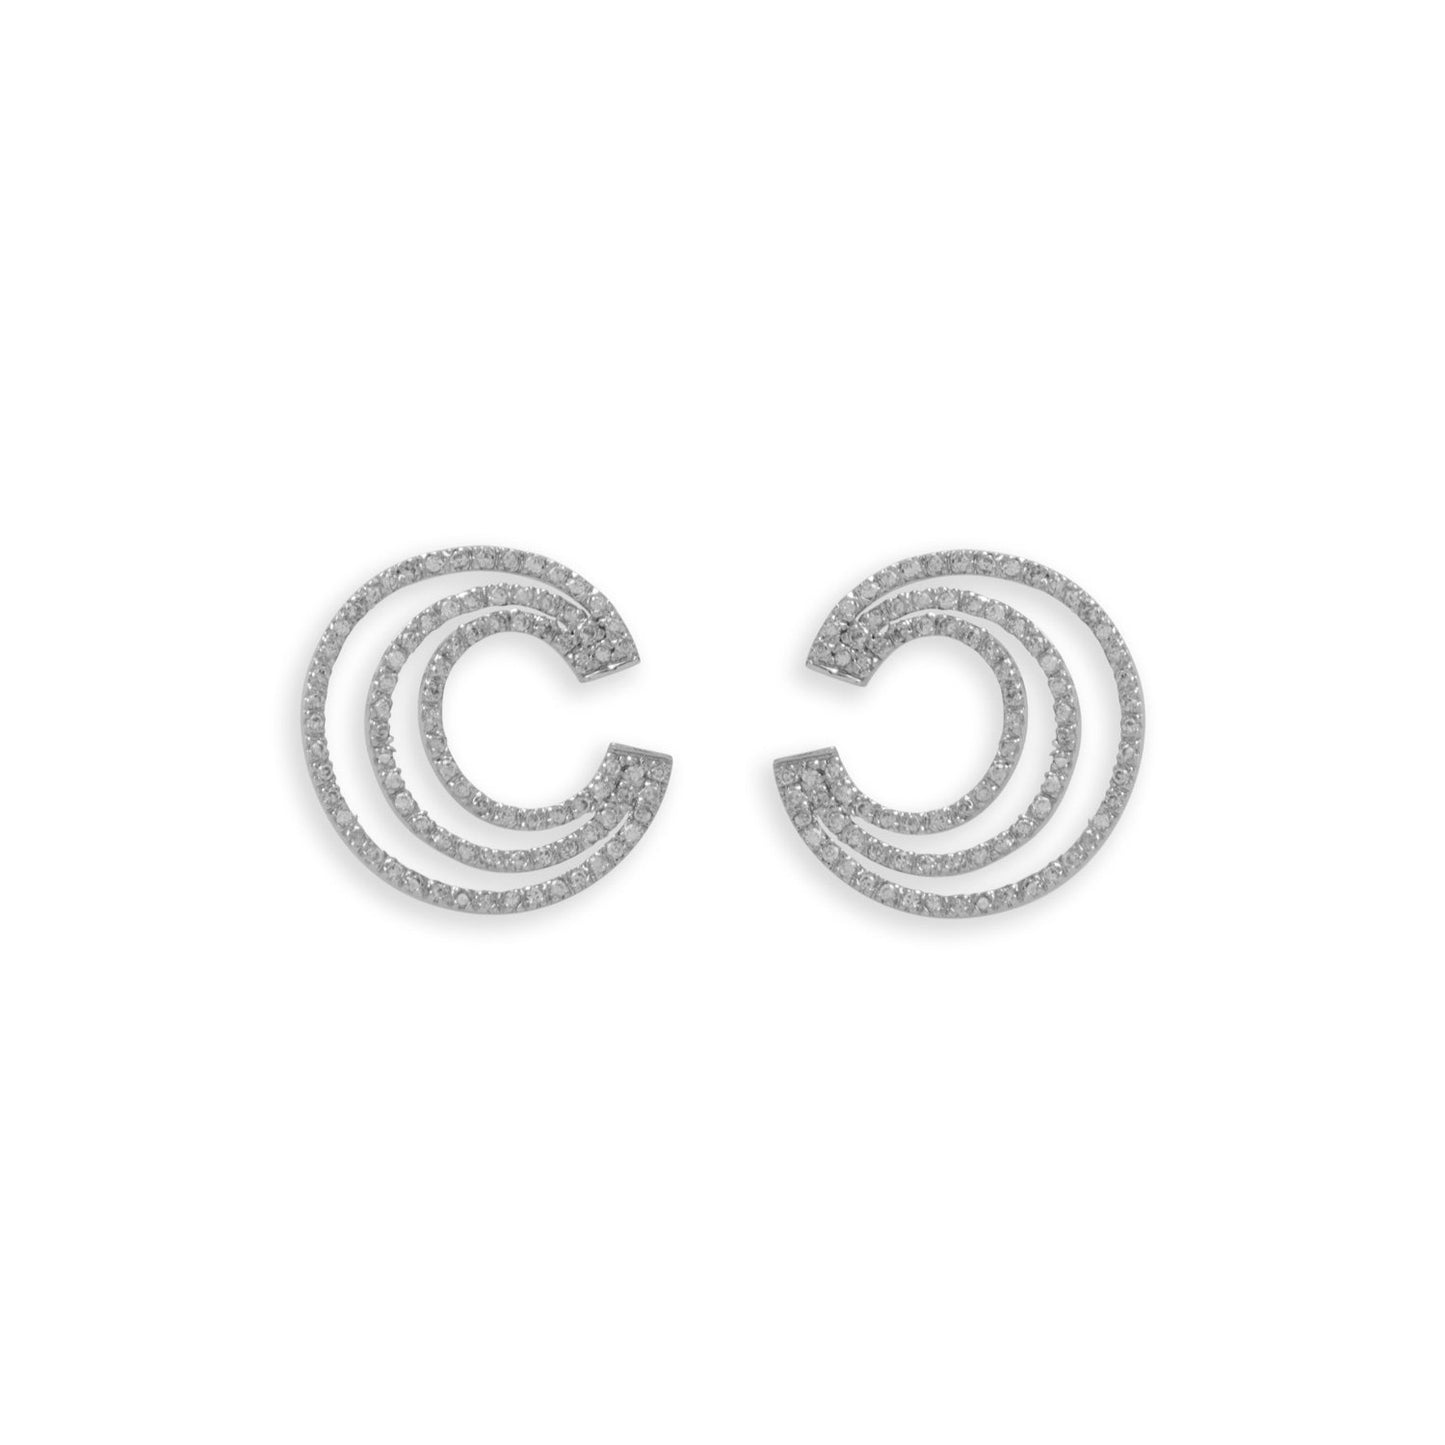 Rhodium Plated Sterling Silver Triple"C" Cubic Zirconia Post Earrings